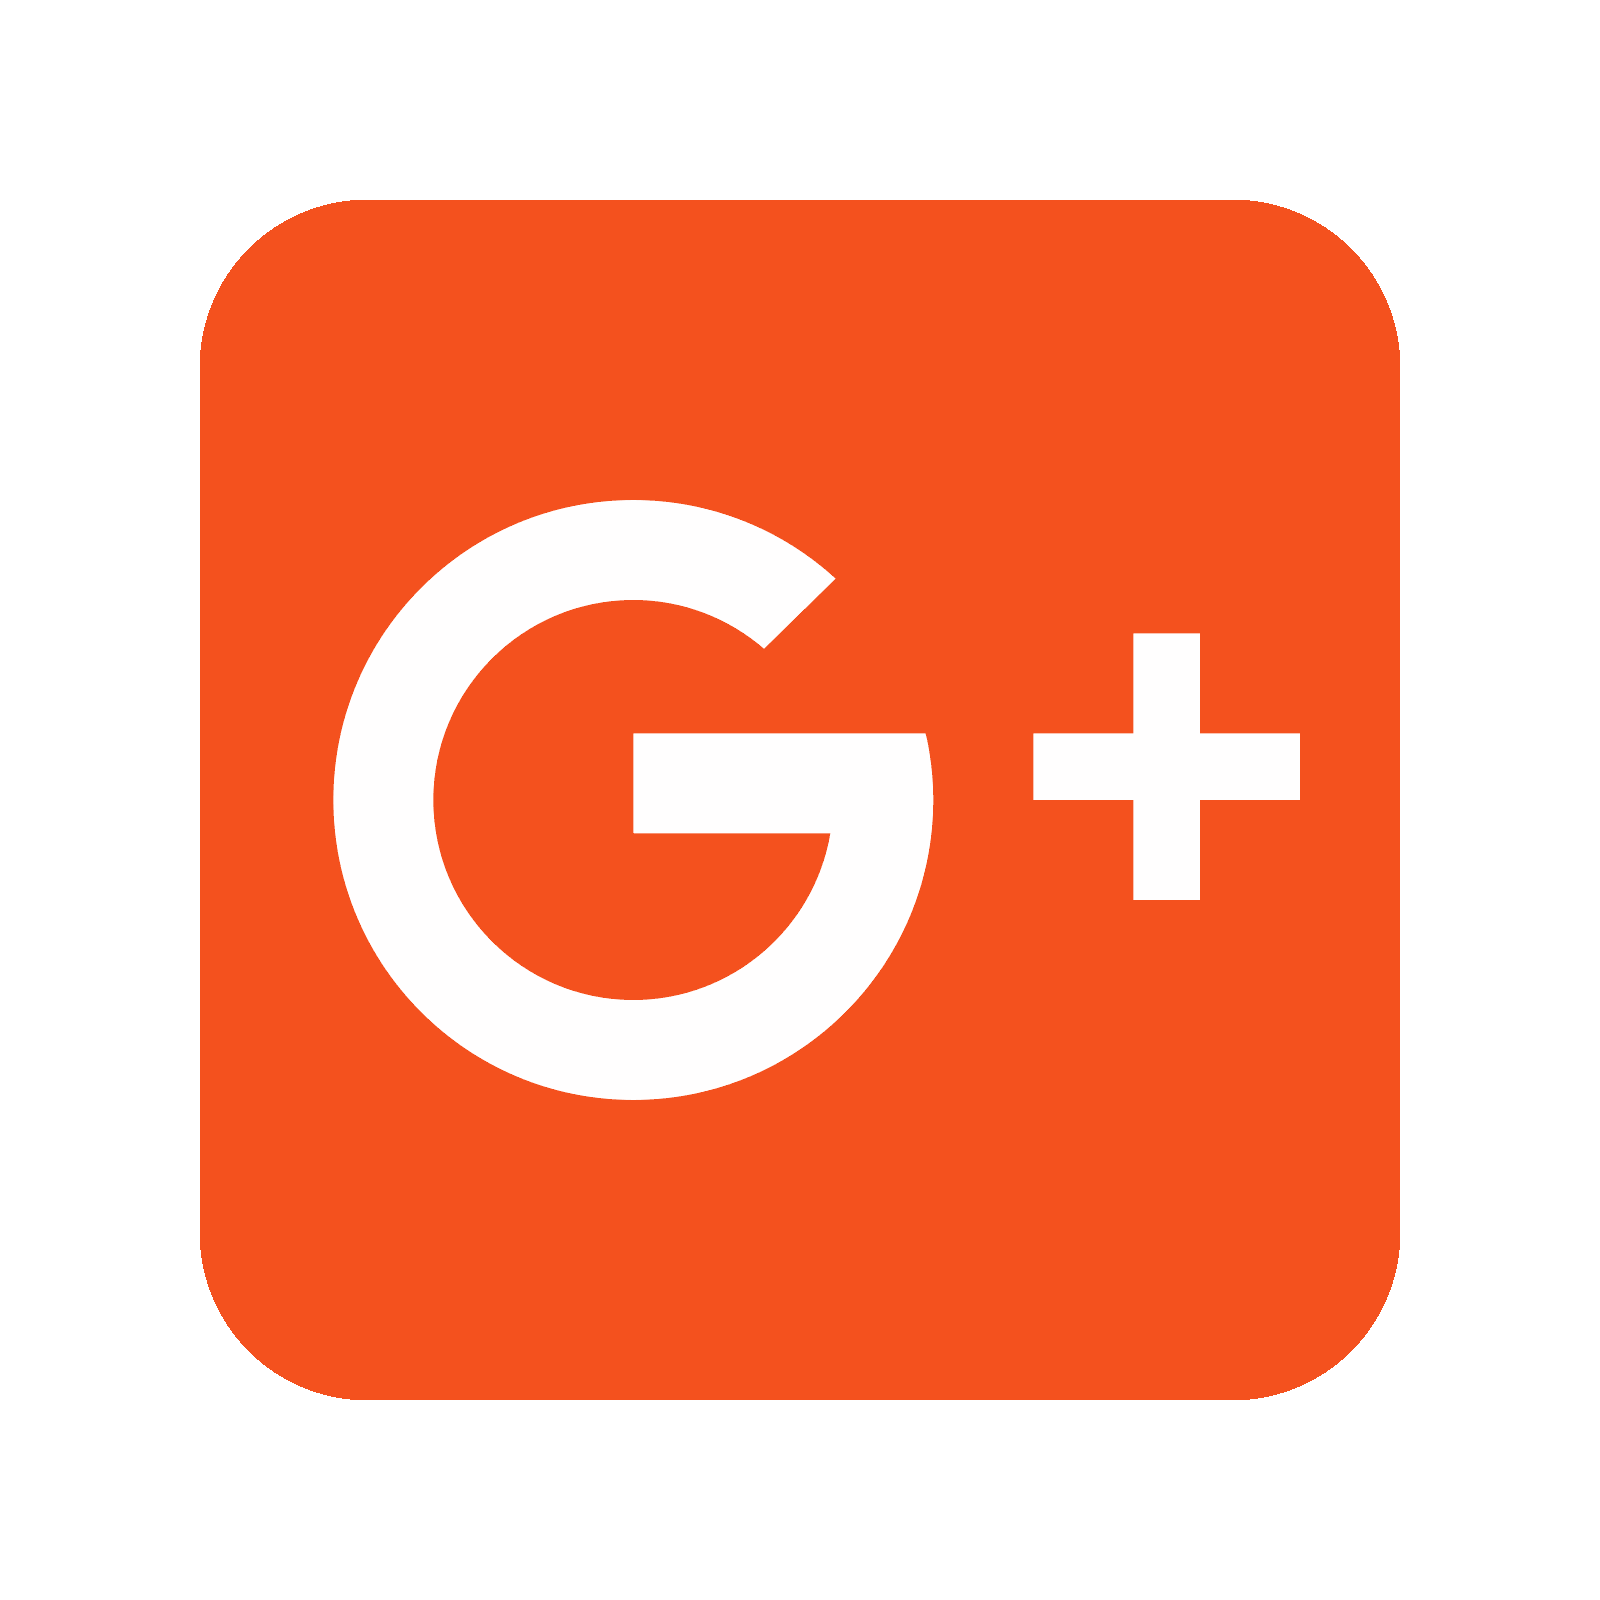 Google icon vector | Download free